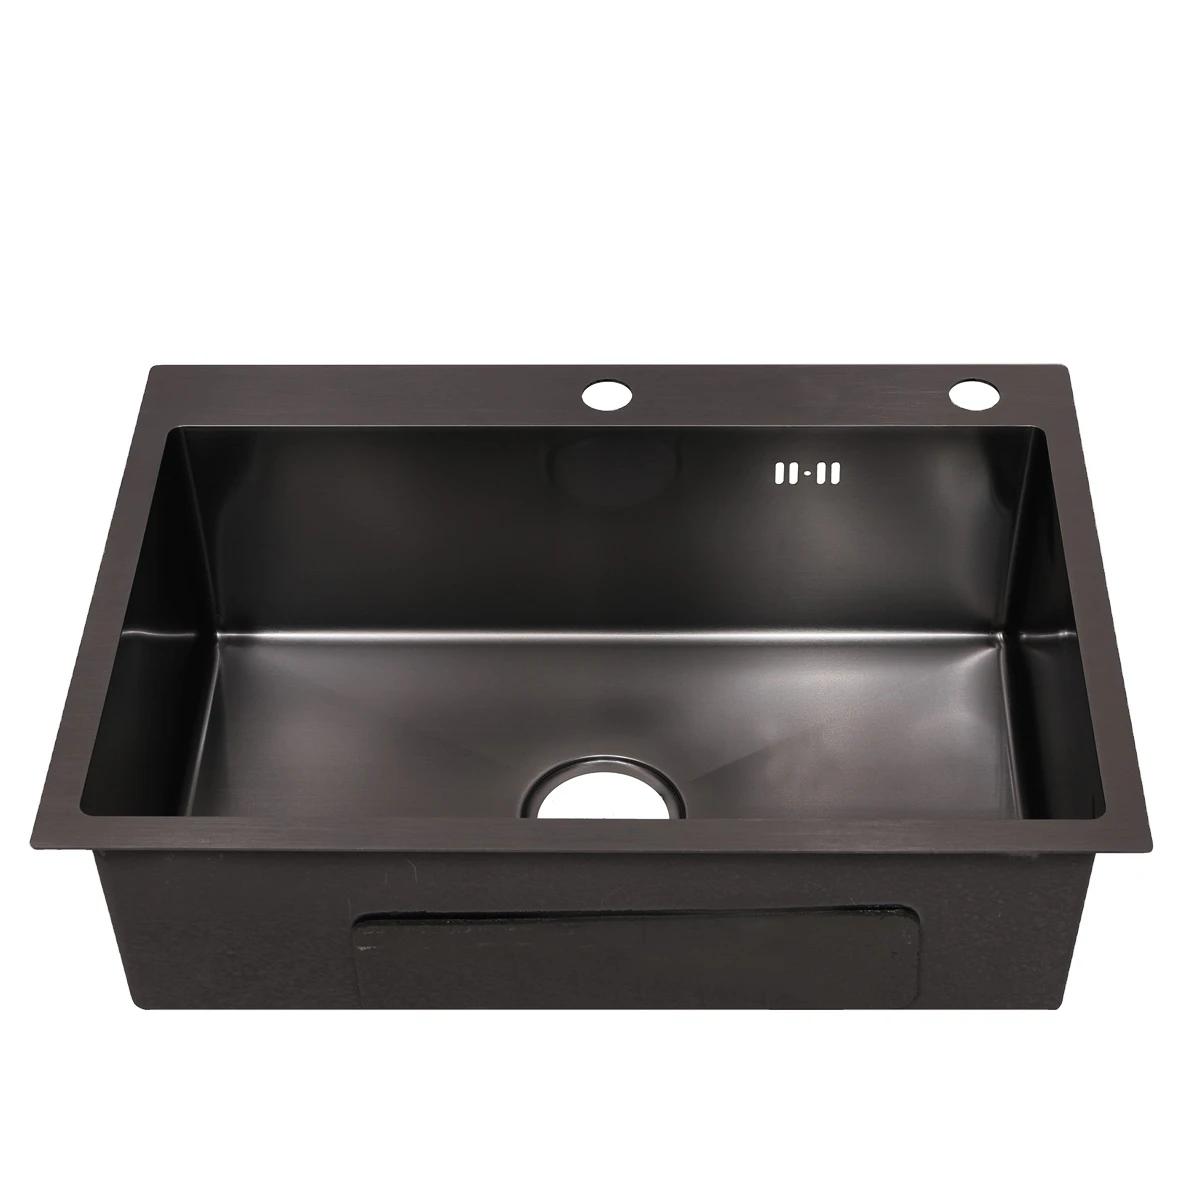 Hot Selling Modern Design Kitchen Sink Undermounted Single Bowl Black Sinks